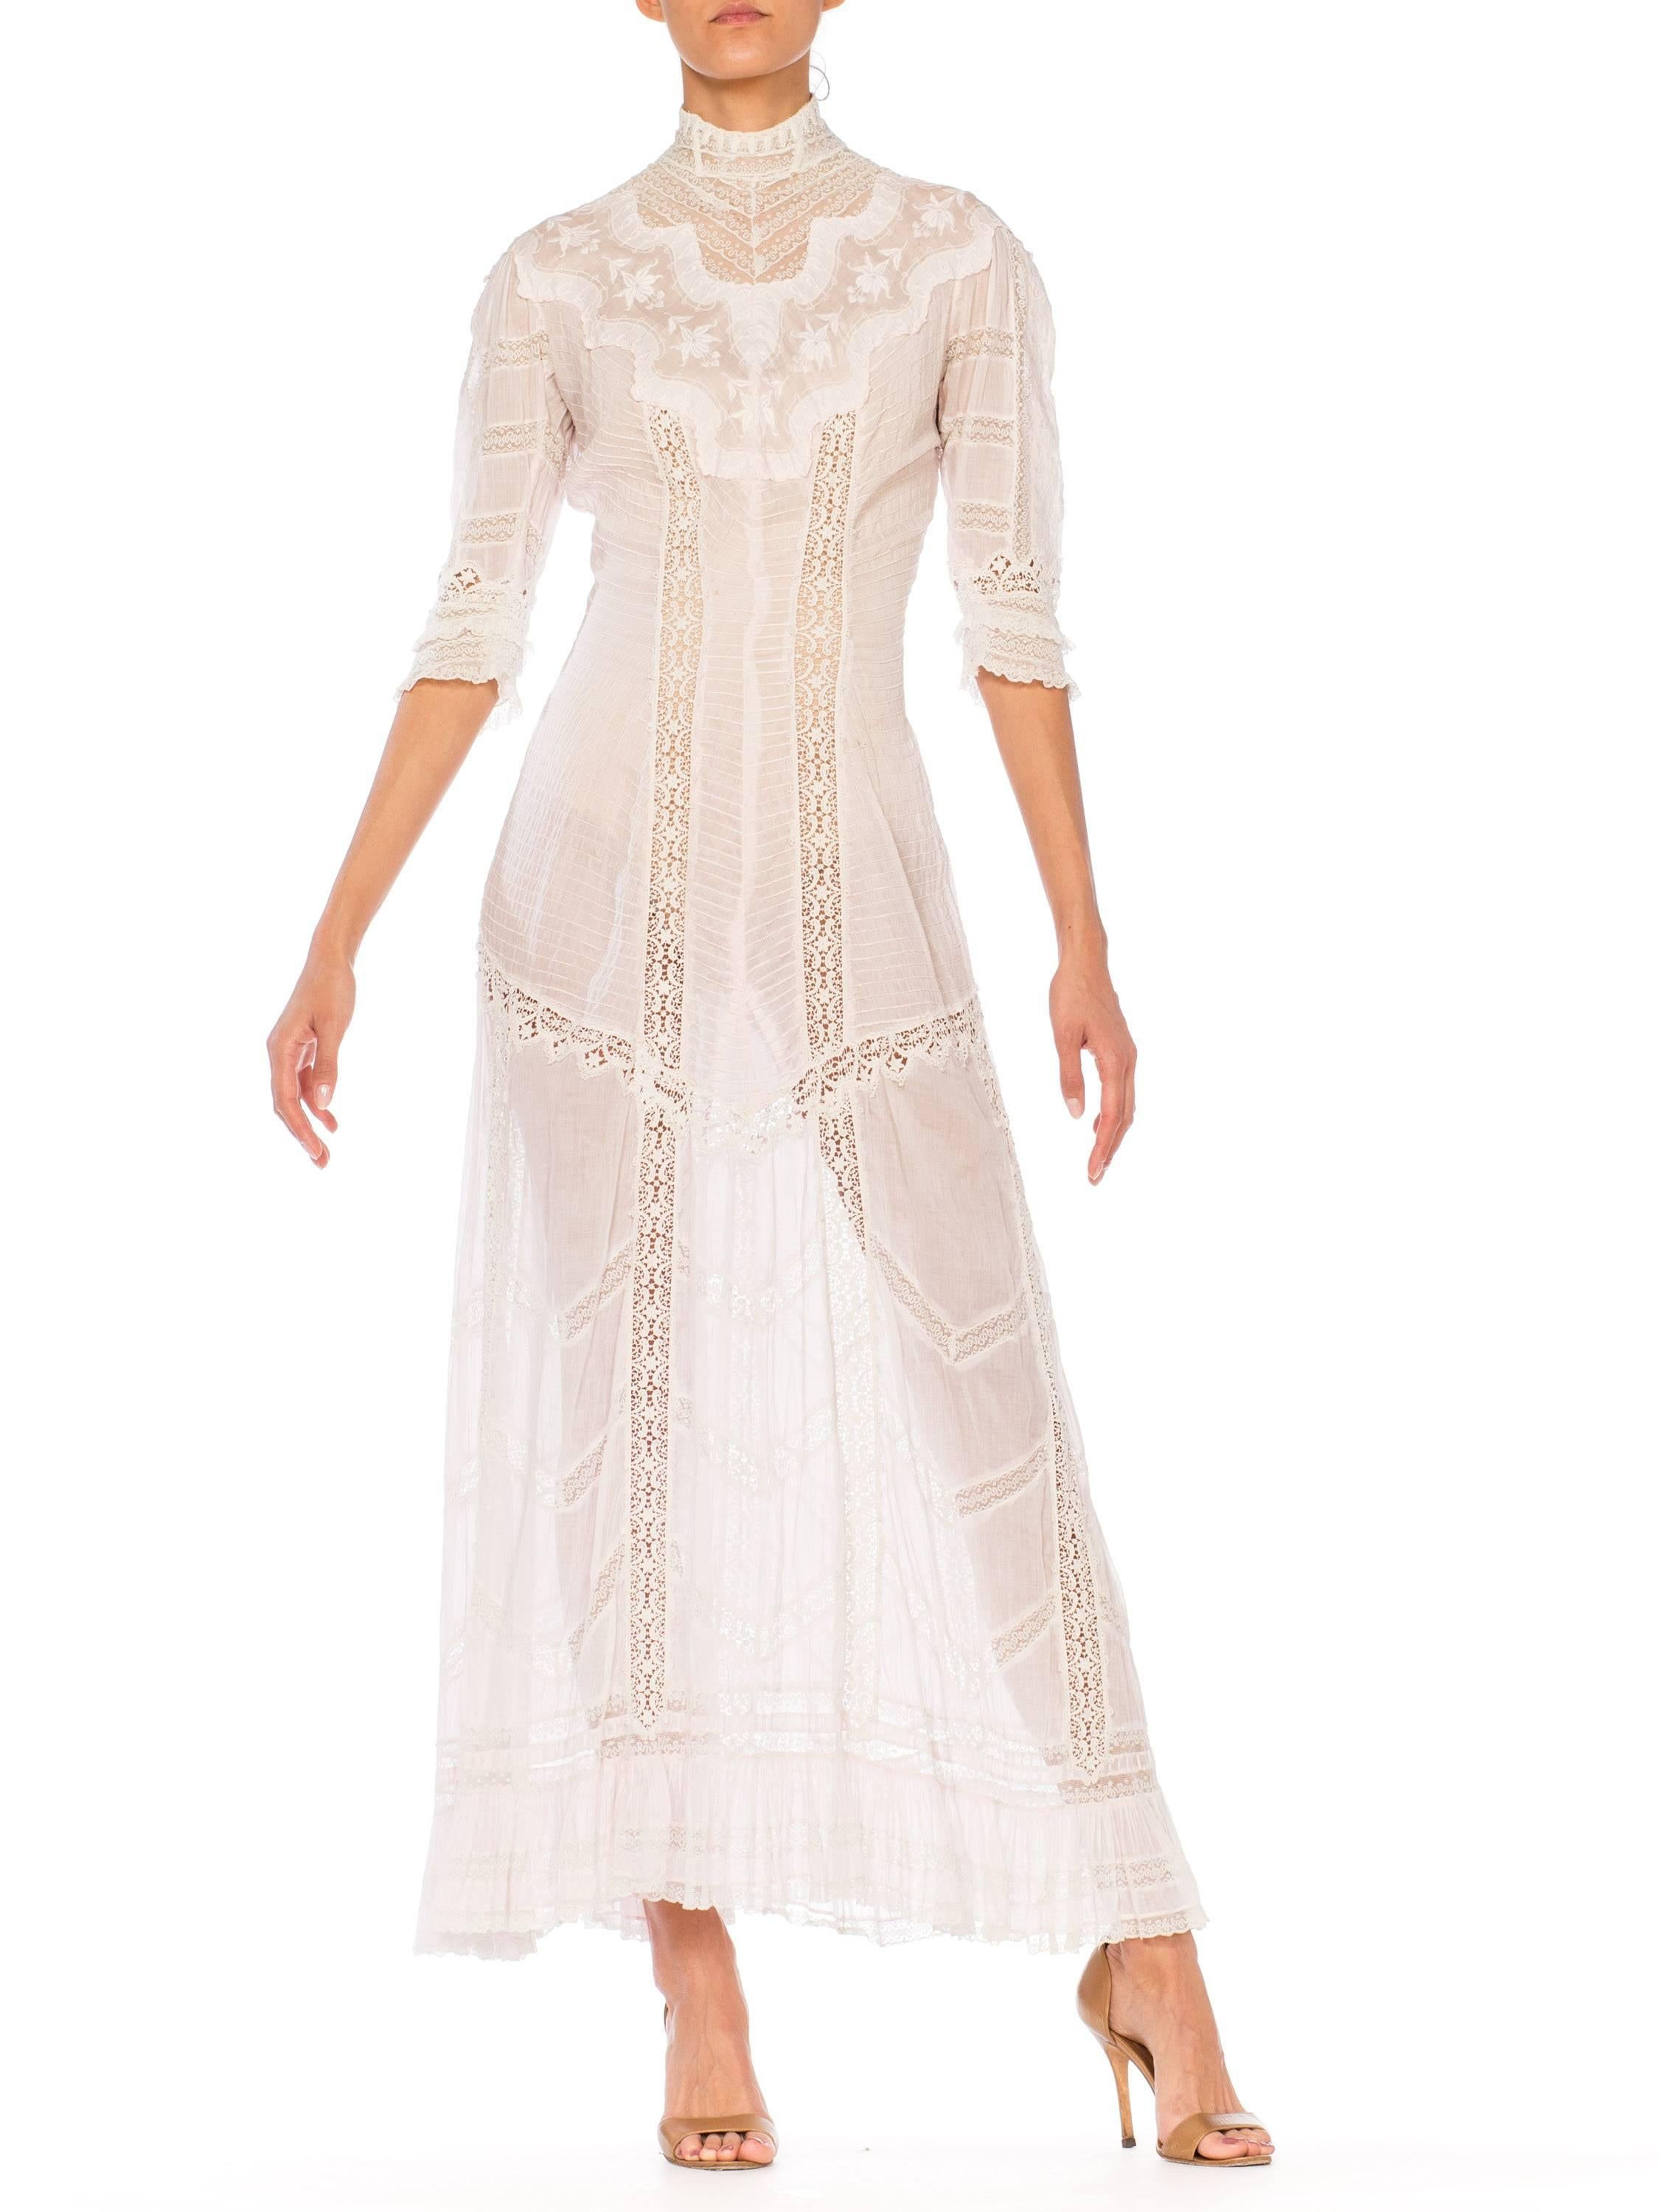 Belle Epoque Swan Neck Princess Line Victorian Organic Cotton and Lace Tea Dress 1